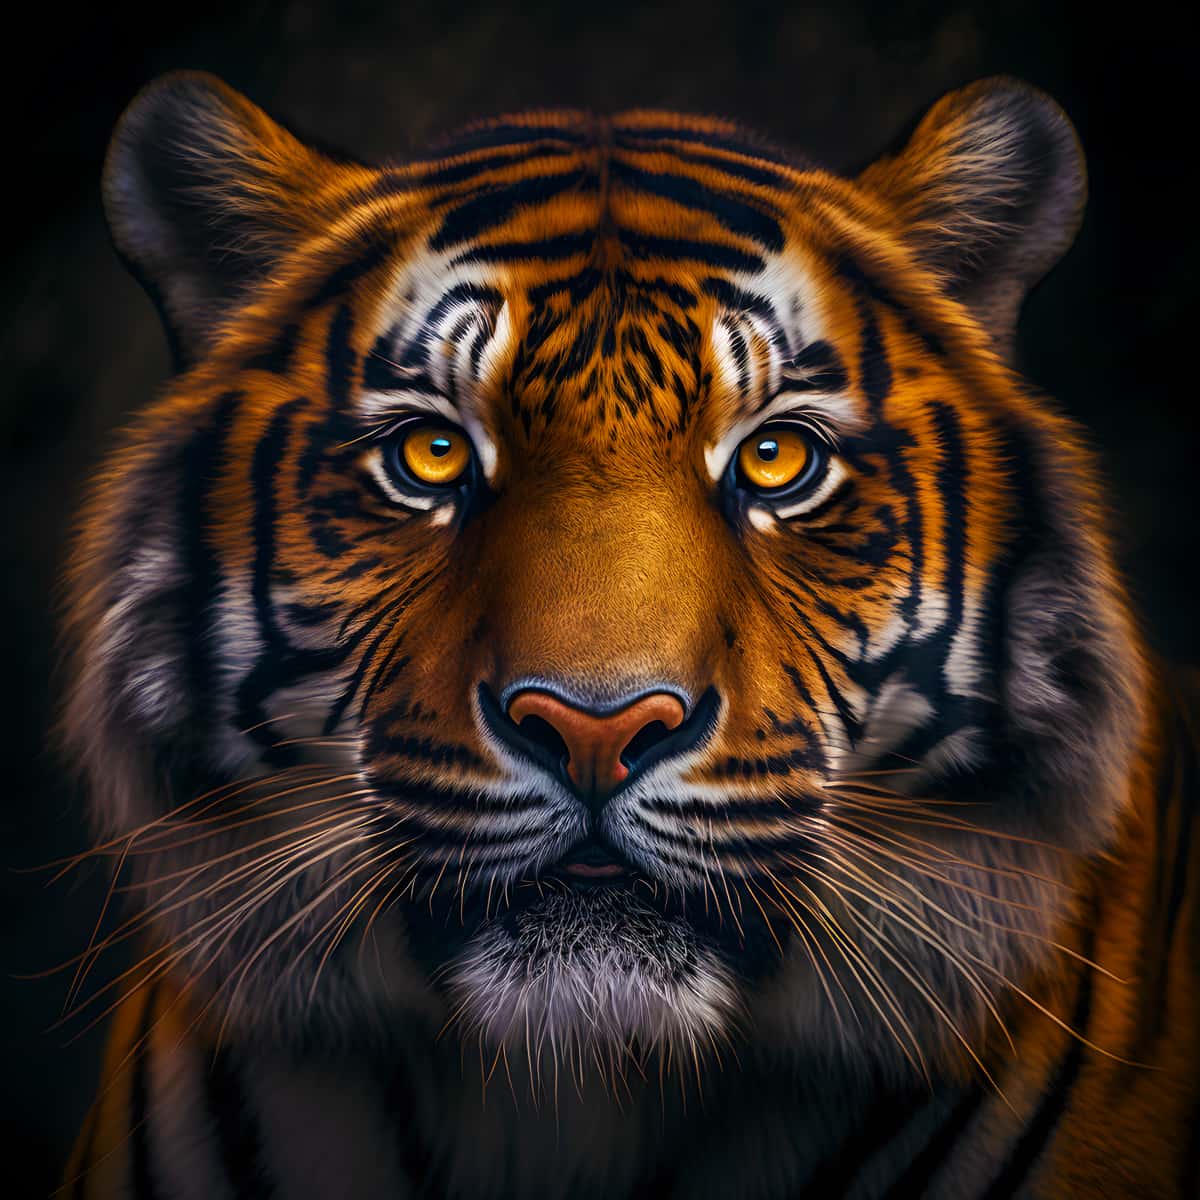 Diamond Painting - Tiger frontaler Blick - gedruckt in Ultra-HD - Neu eingetroffen, Quadratisch, Tiere, Tiger